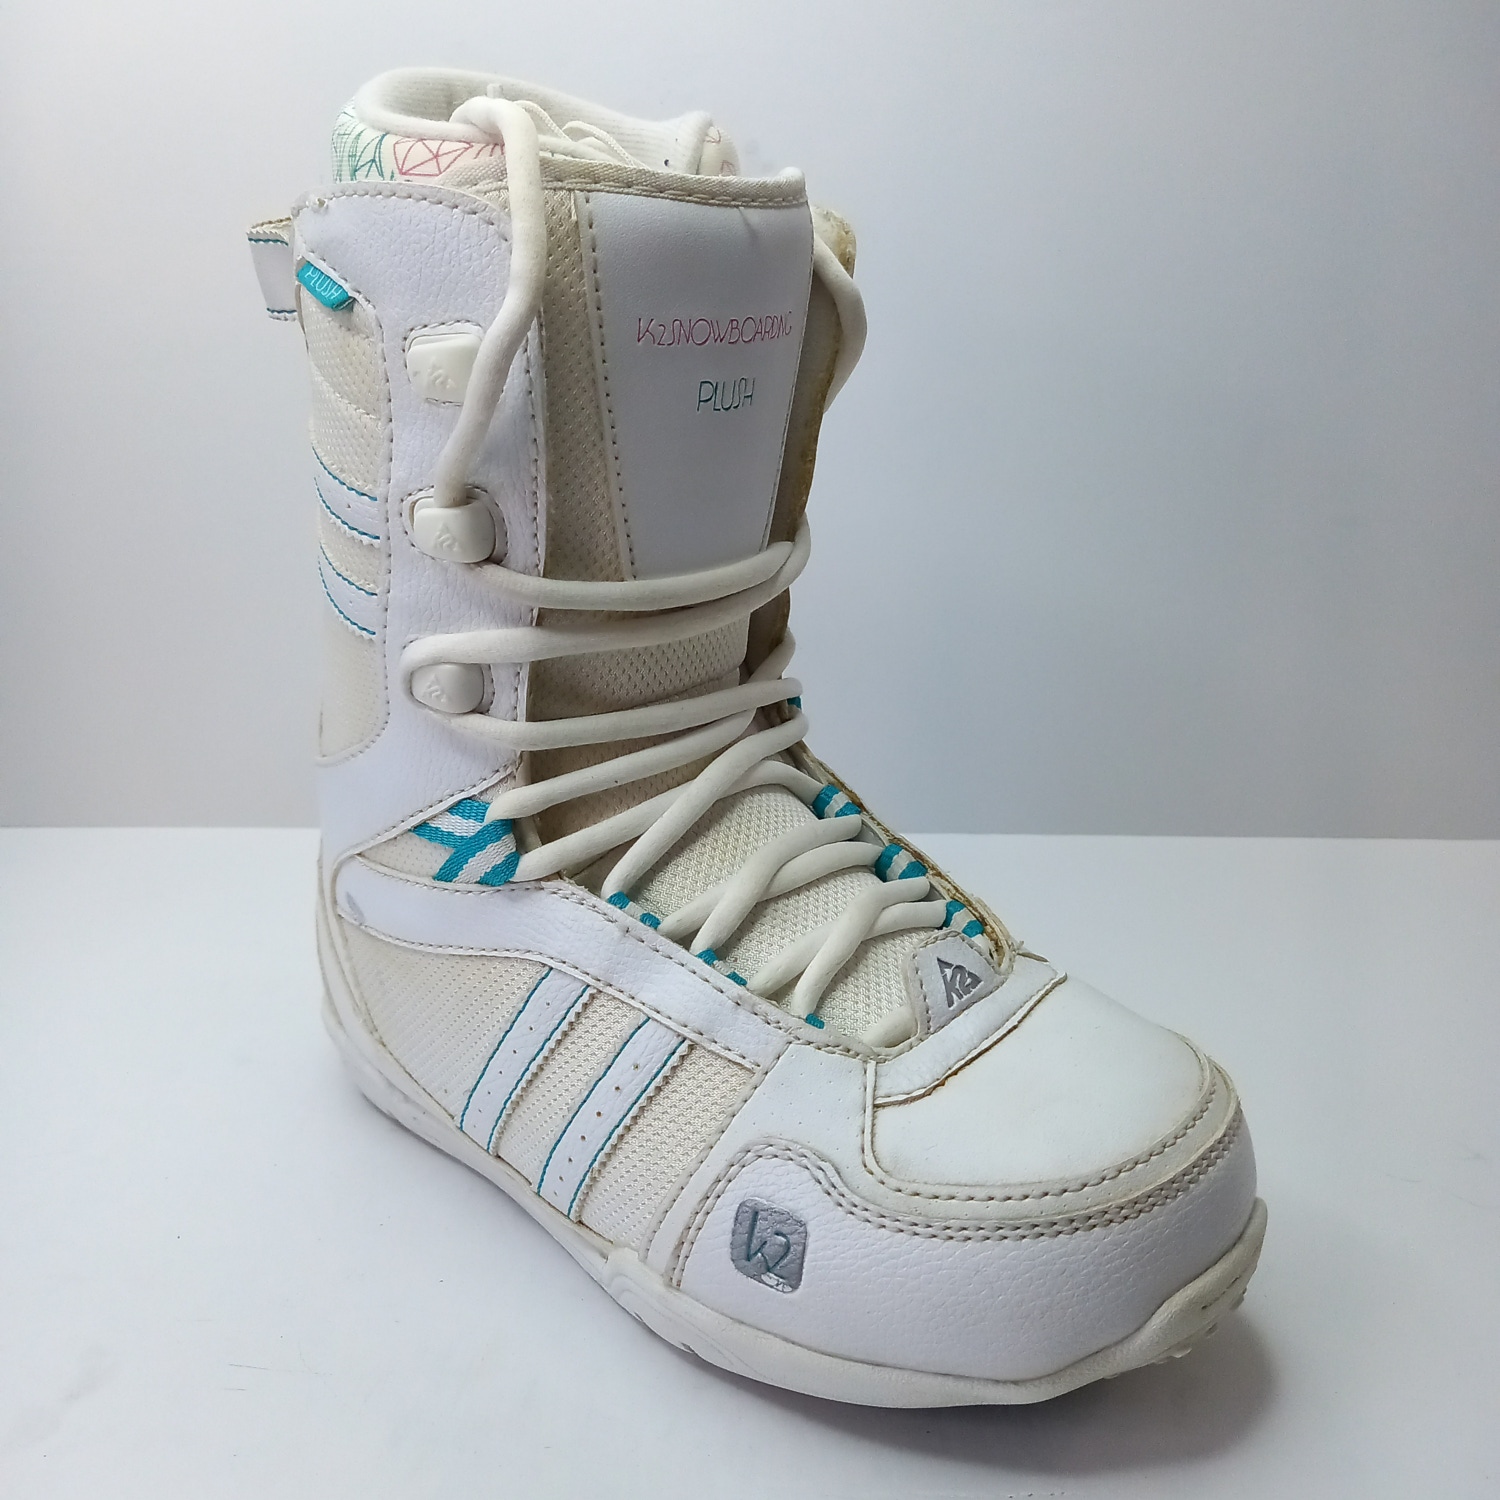 Women's Used Size 4.0 (Women's 5.0) K2 Plush Snowboard Boots